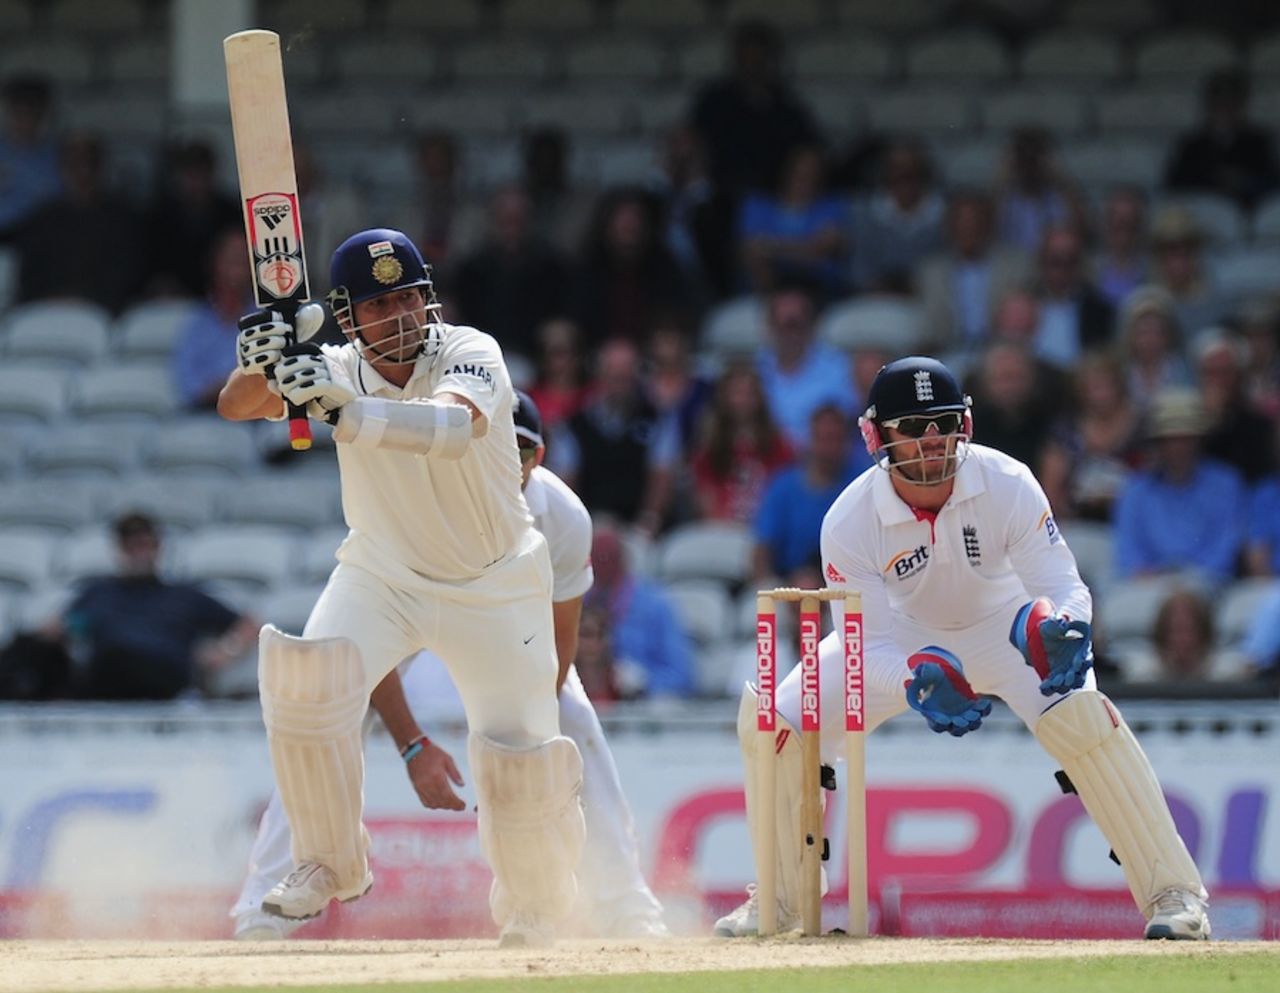 Sachin Tendulkar plays through the leg side, England v India, 4th Test, The Oval, 5th day, August 22, 2011